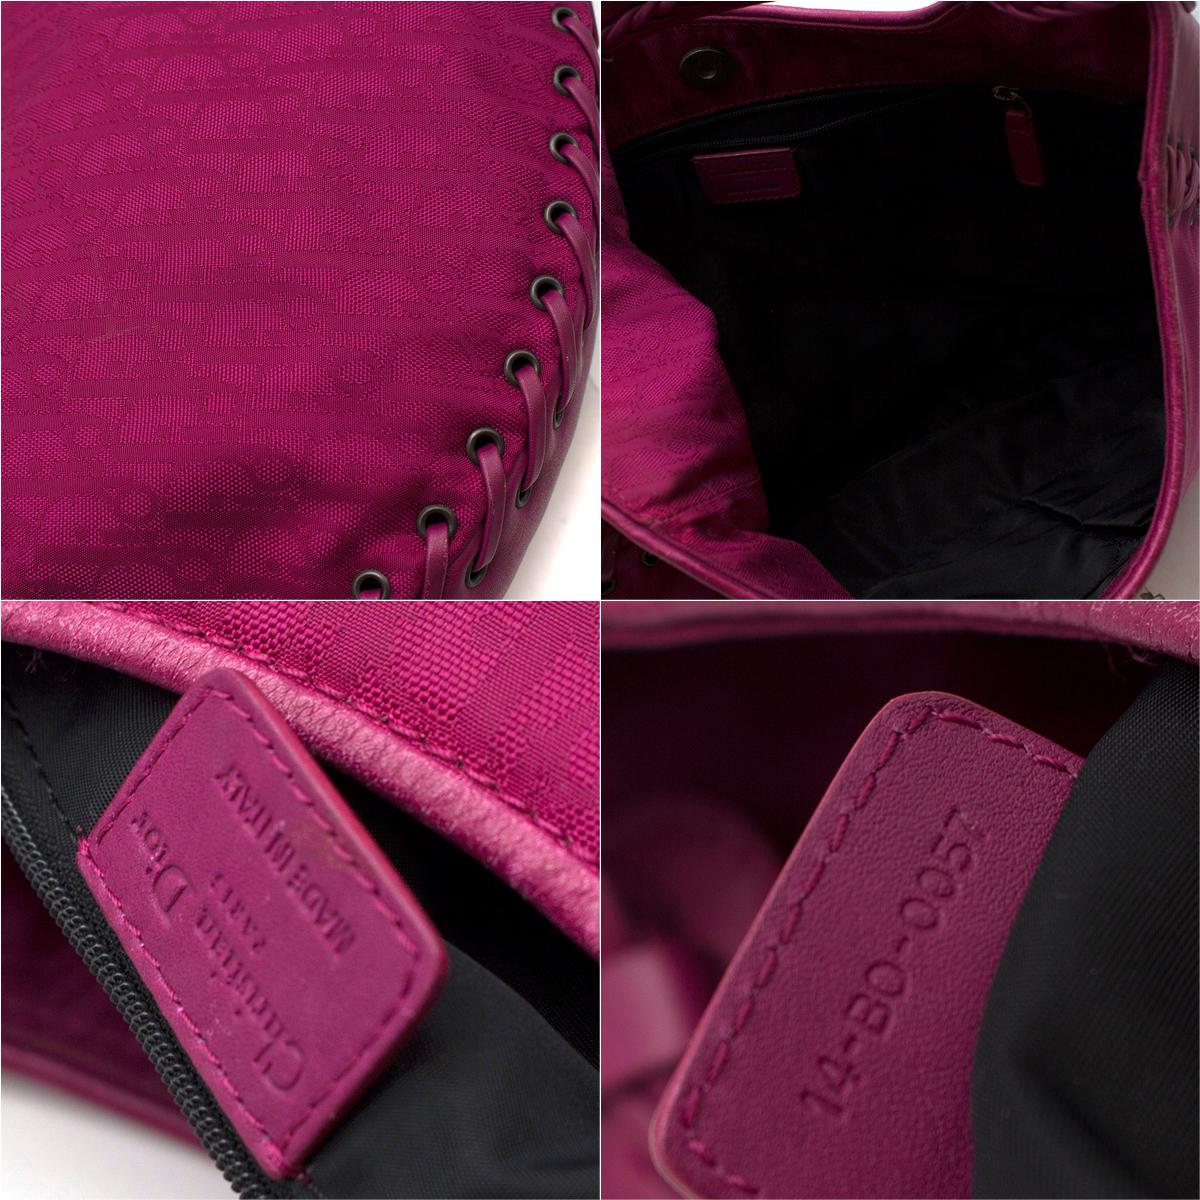 Dior Heart Charm Hobo Bag in Hot Pink 1